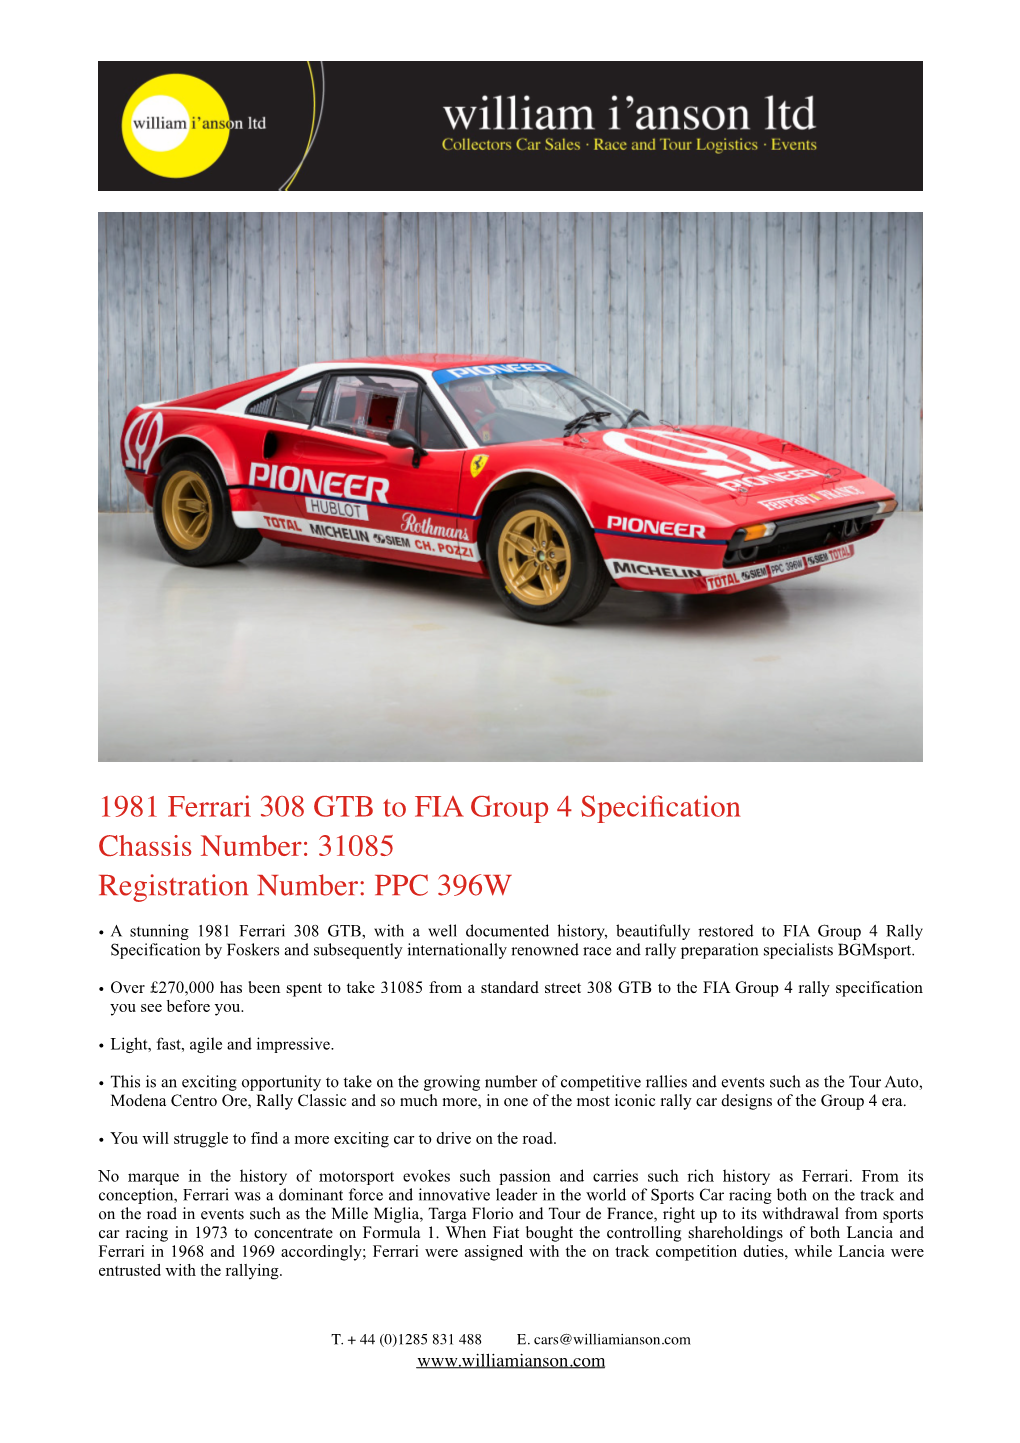 1981 Ferrari 308 Group 4